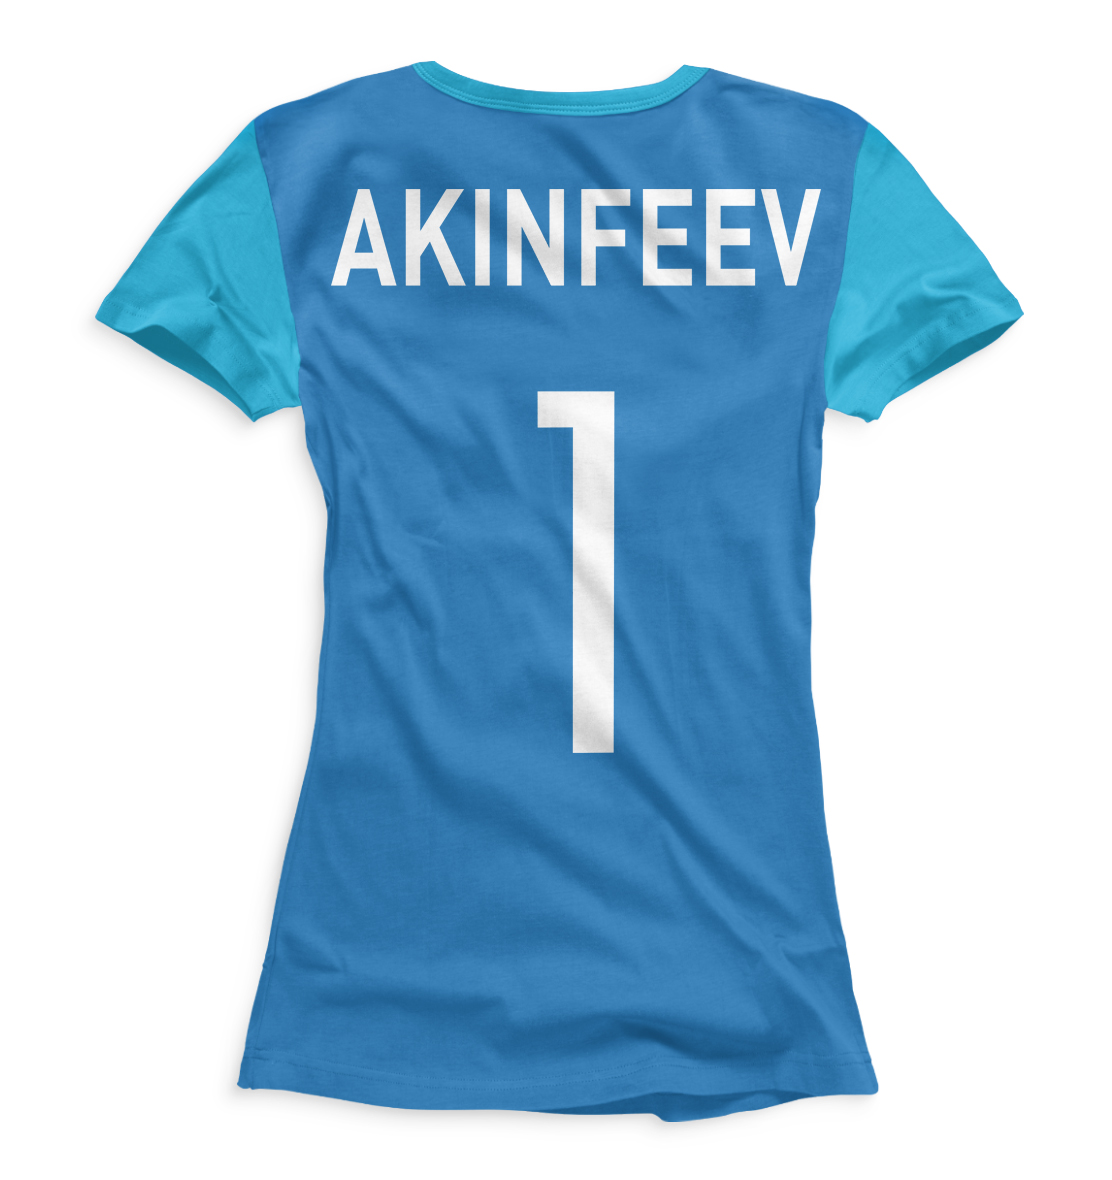 Футболка Акинфеев для девочек, артикул: FLT-384908-fut-1mp